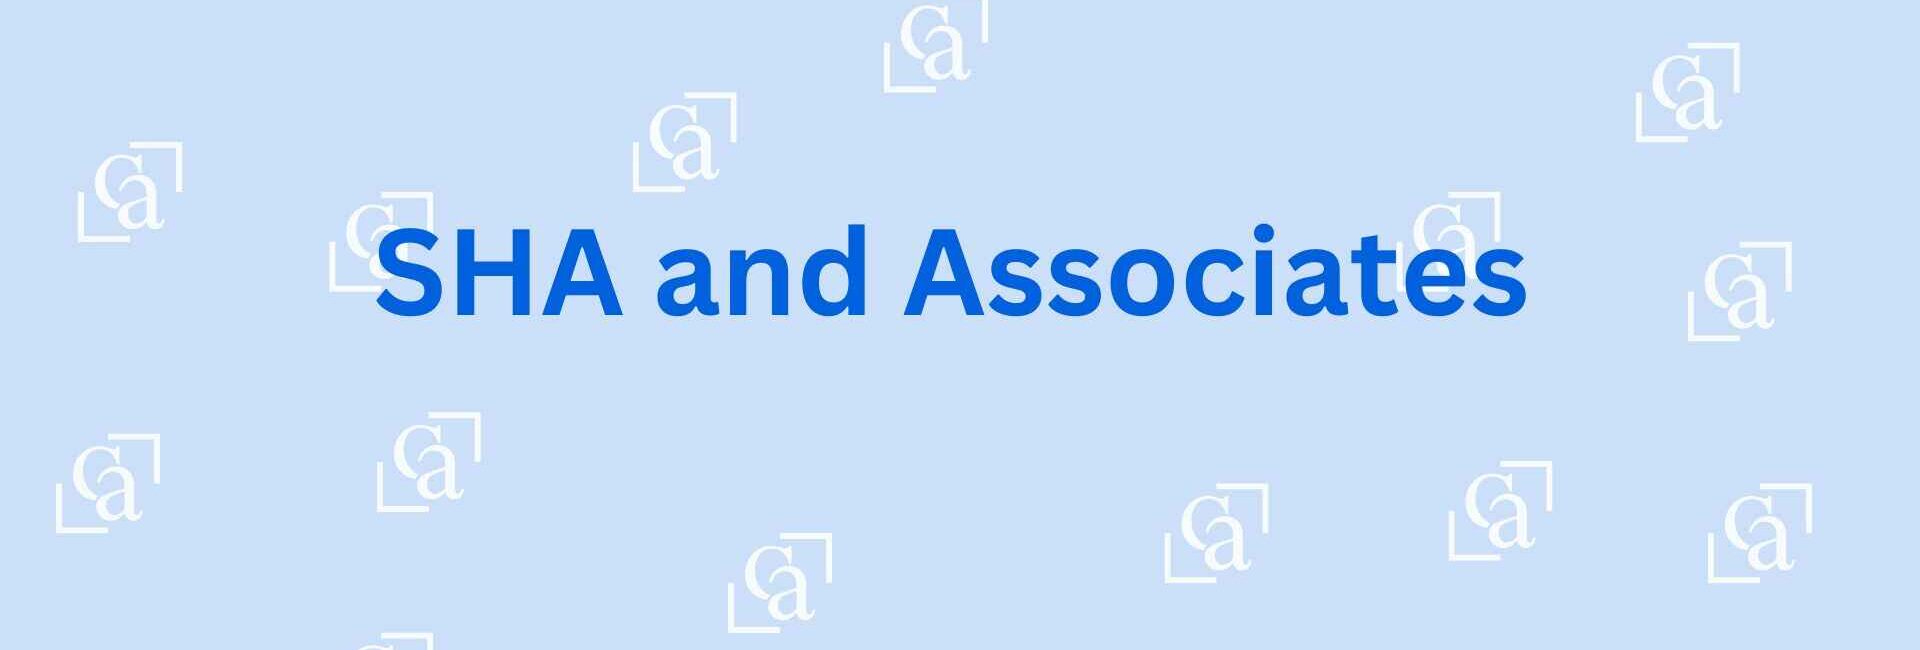 SHA and Associates - Chartered accountant services Noida